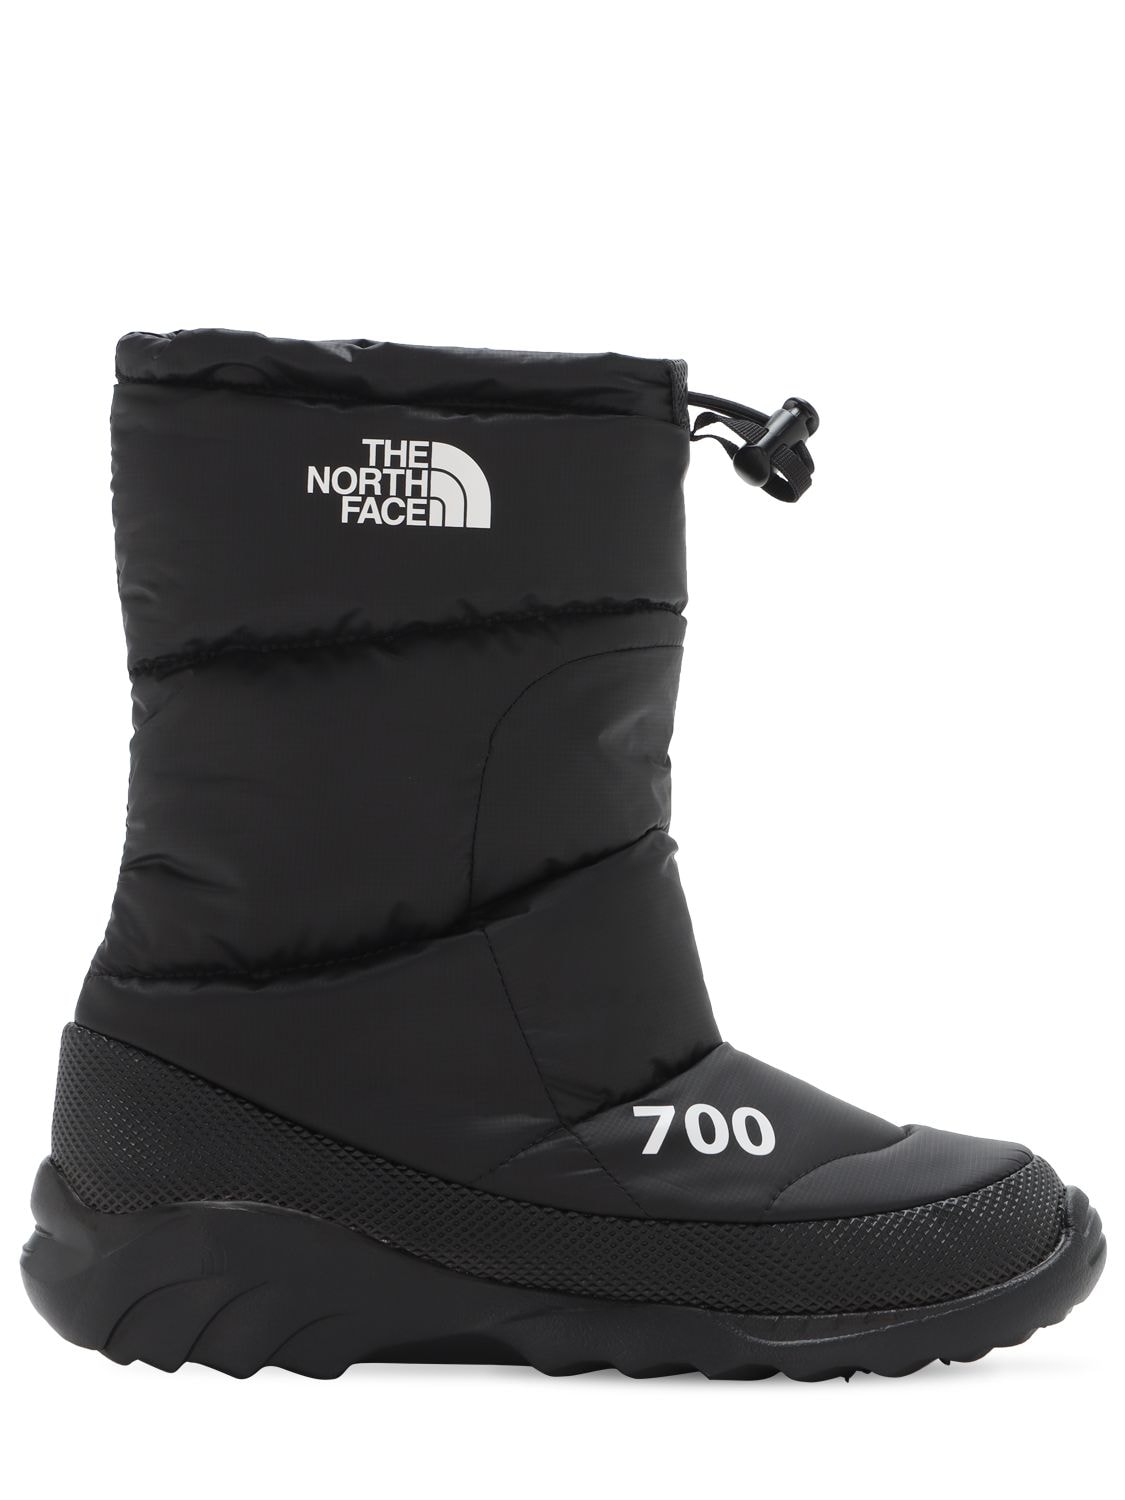 The North Face - Nuptse bootie 700 snow boots - | Luisaviaroma